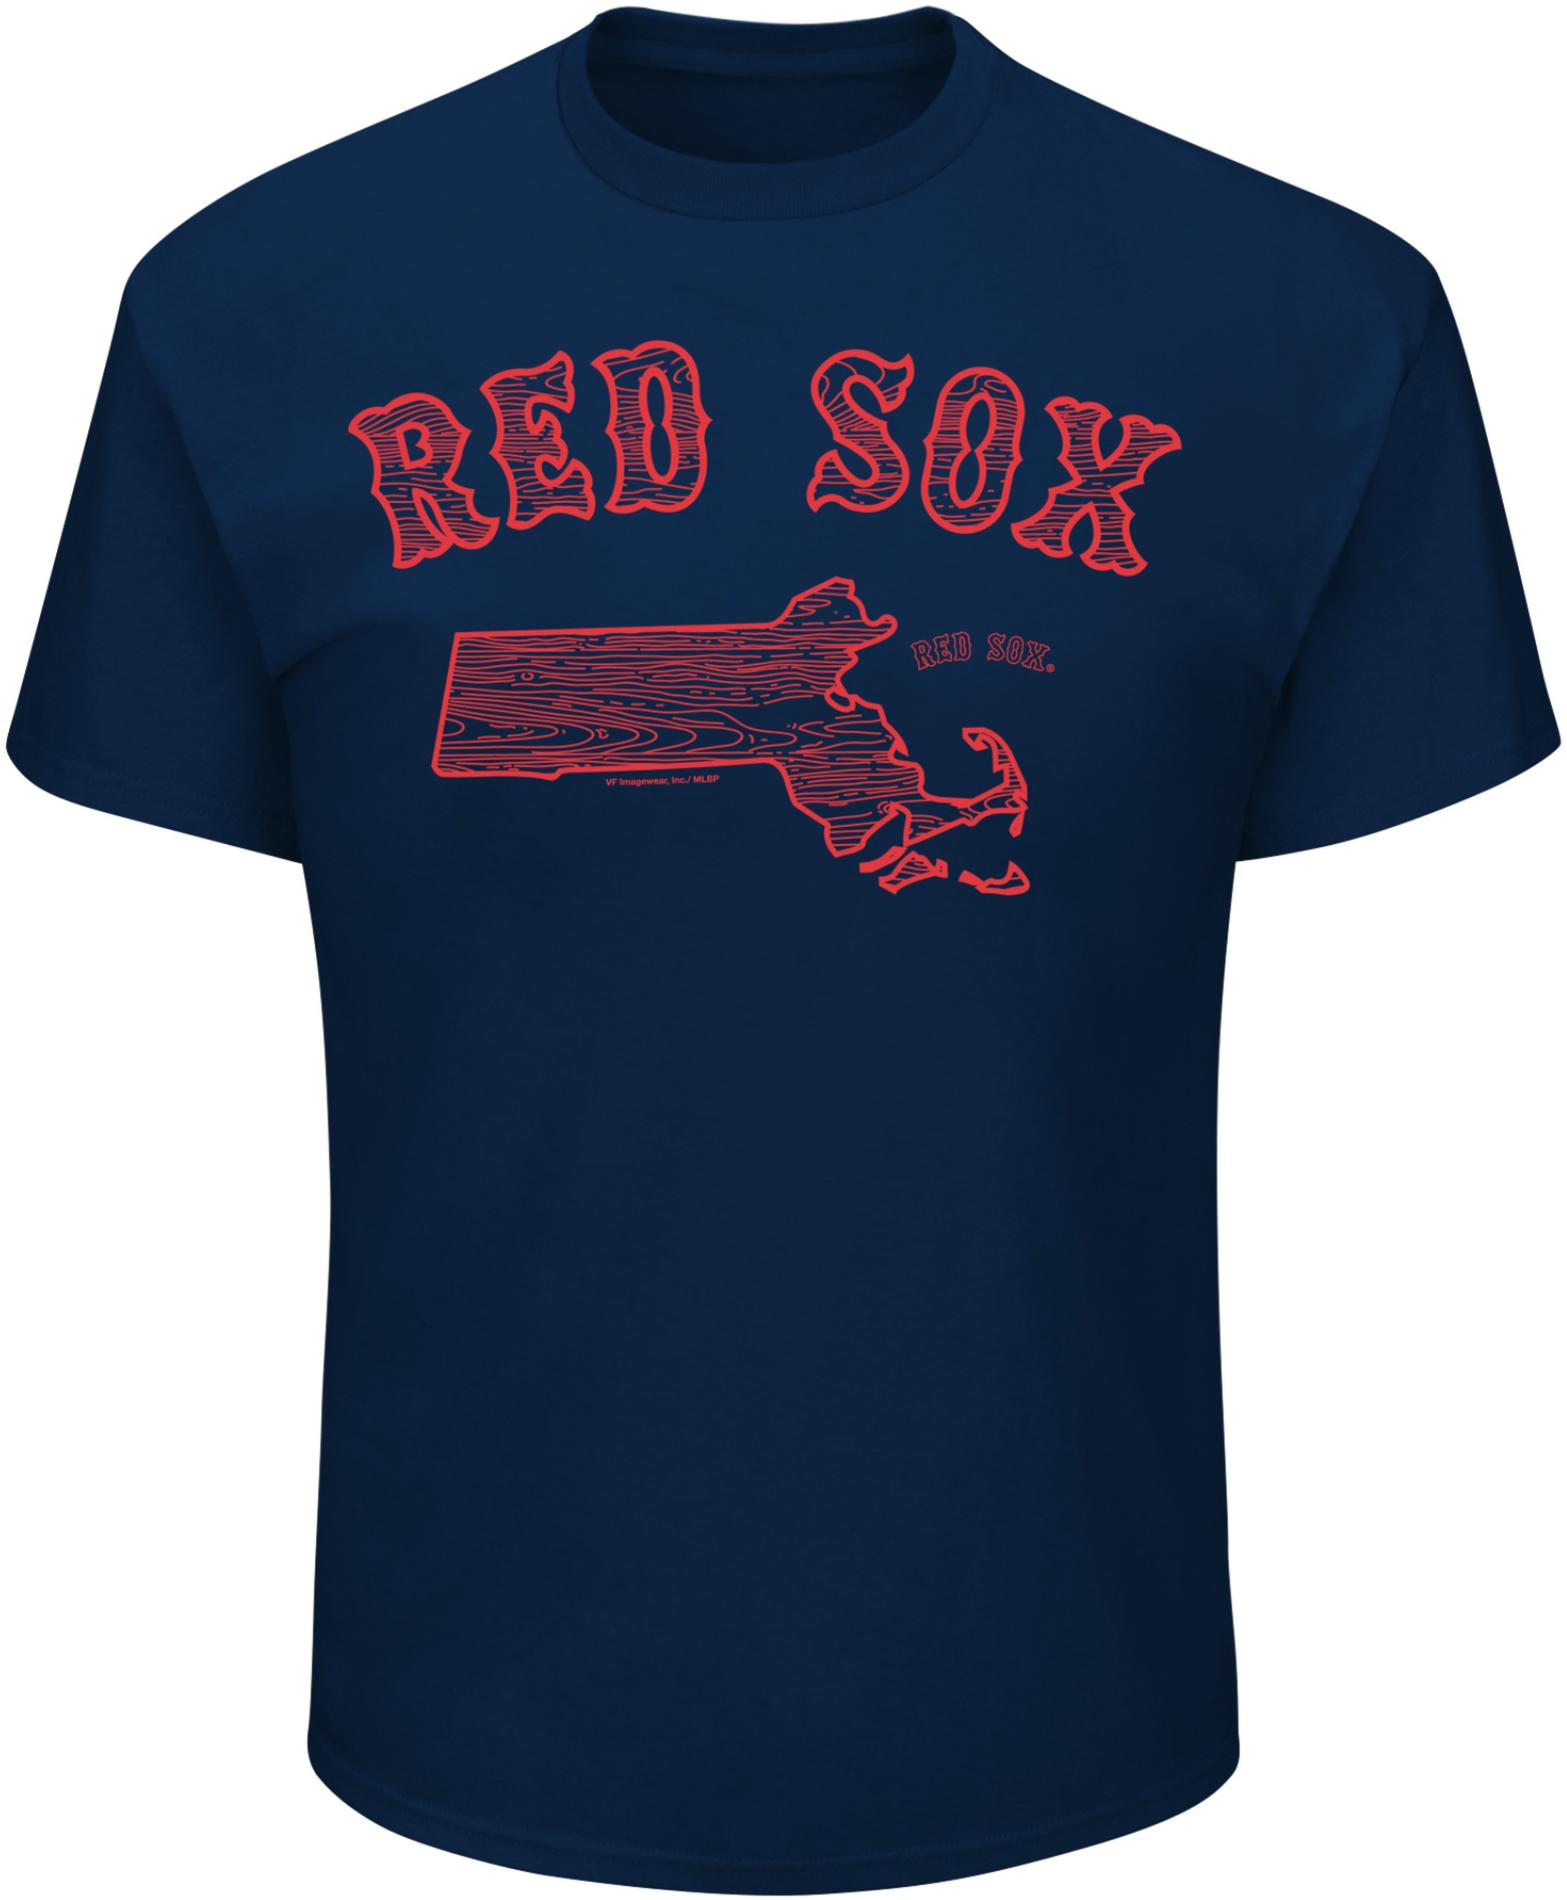 MLB Men's Graphic T-Shirt - Boston Red Sox